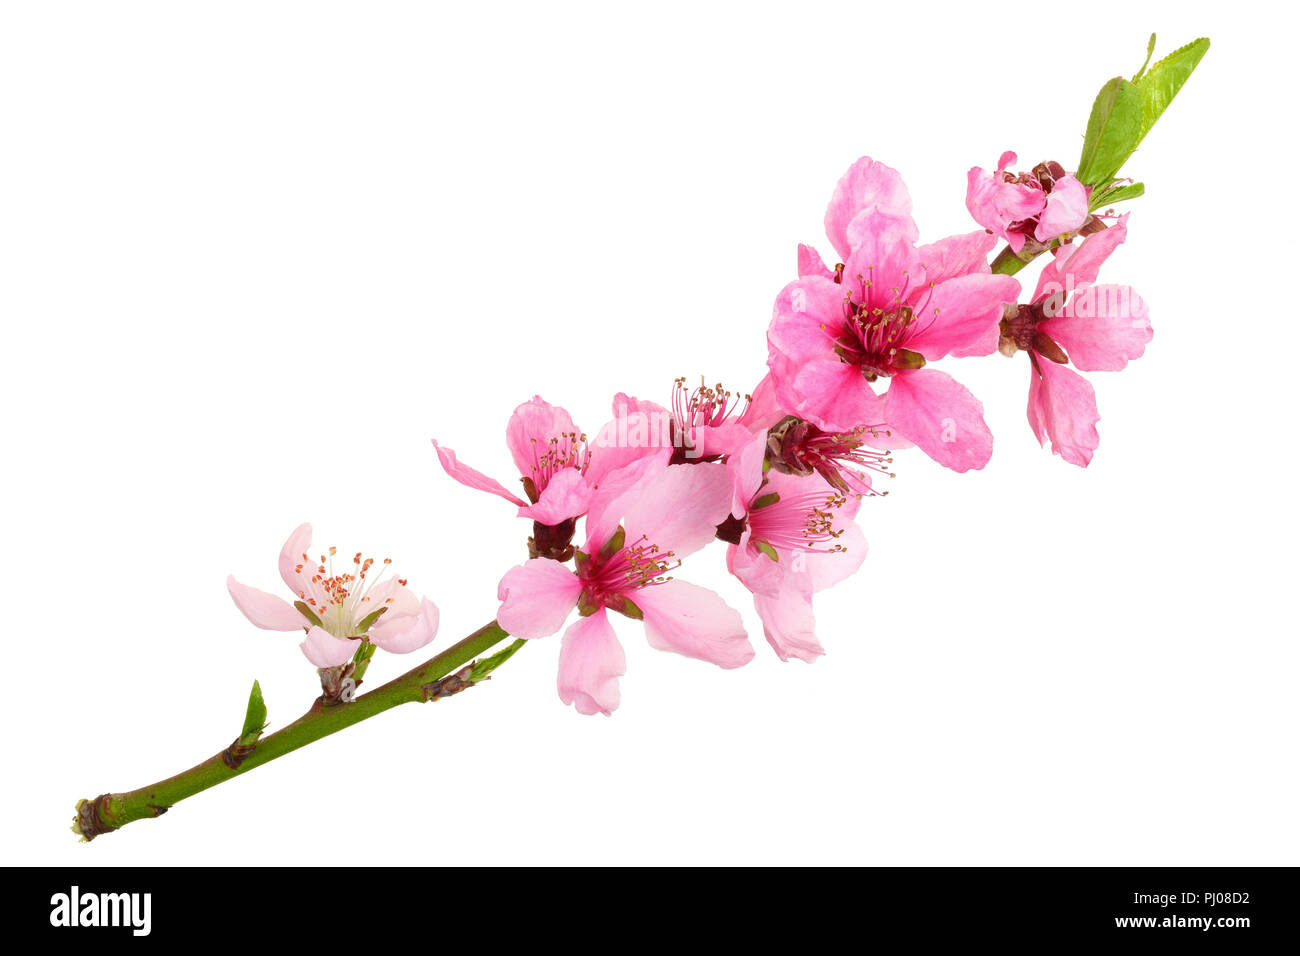 Cherry blossom, sakura flowers isolated on white background. Stock Photo